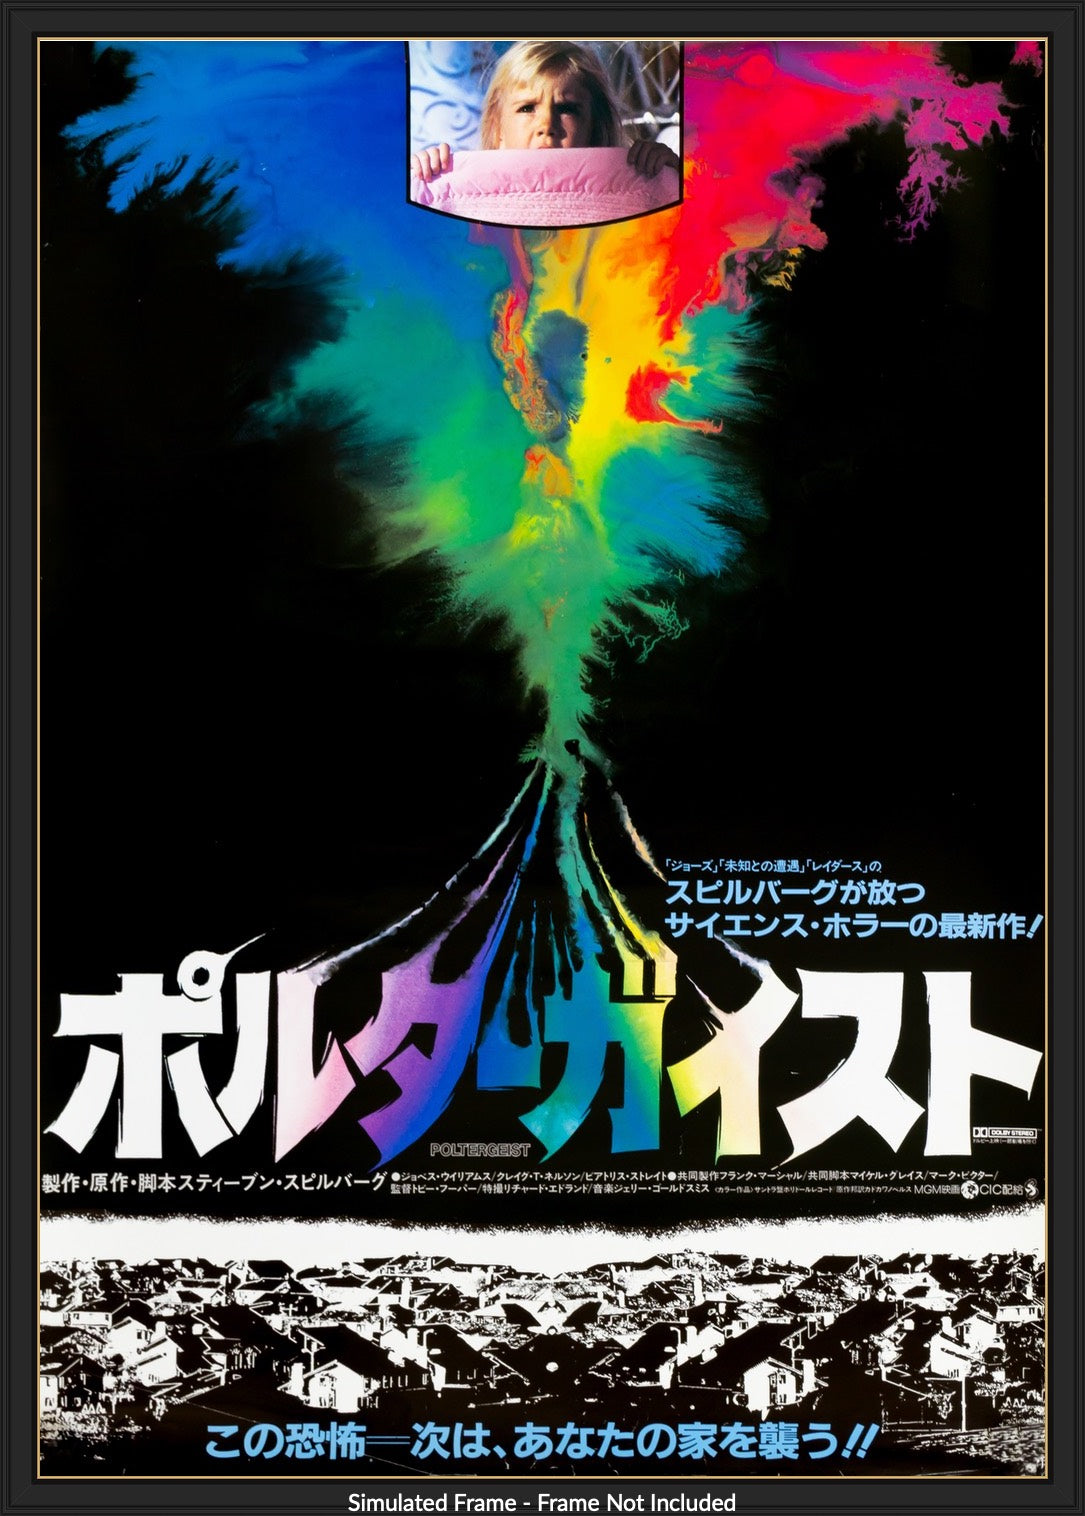 Poltergeist (1982) original movie poster for sale at Original Film Art